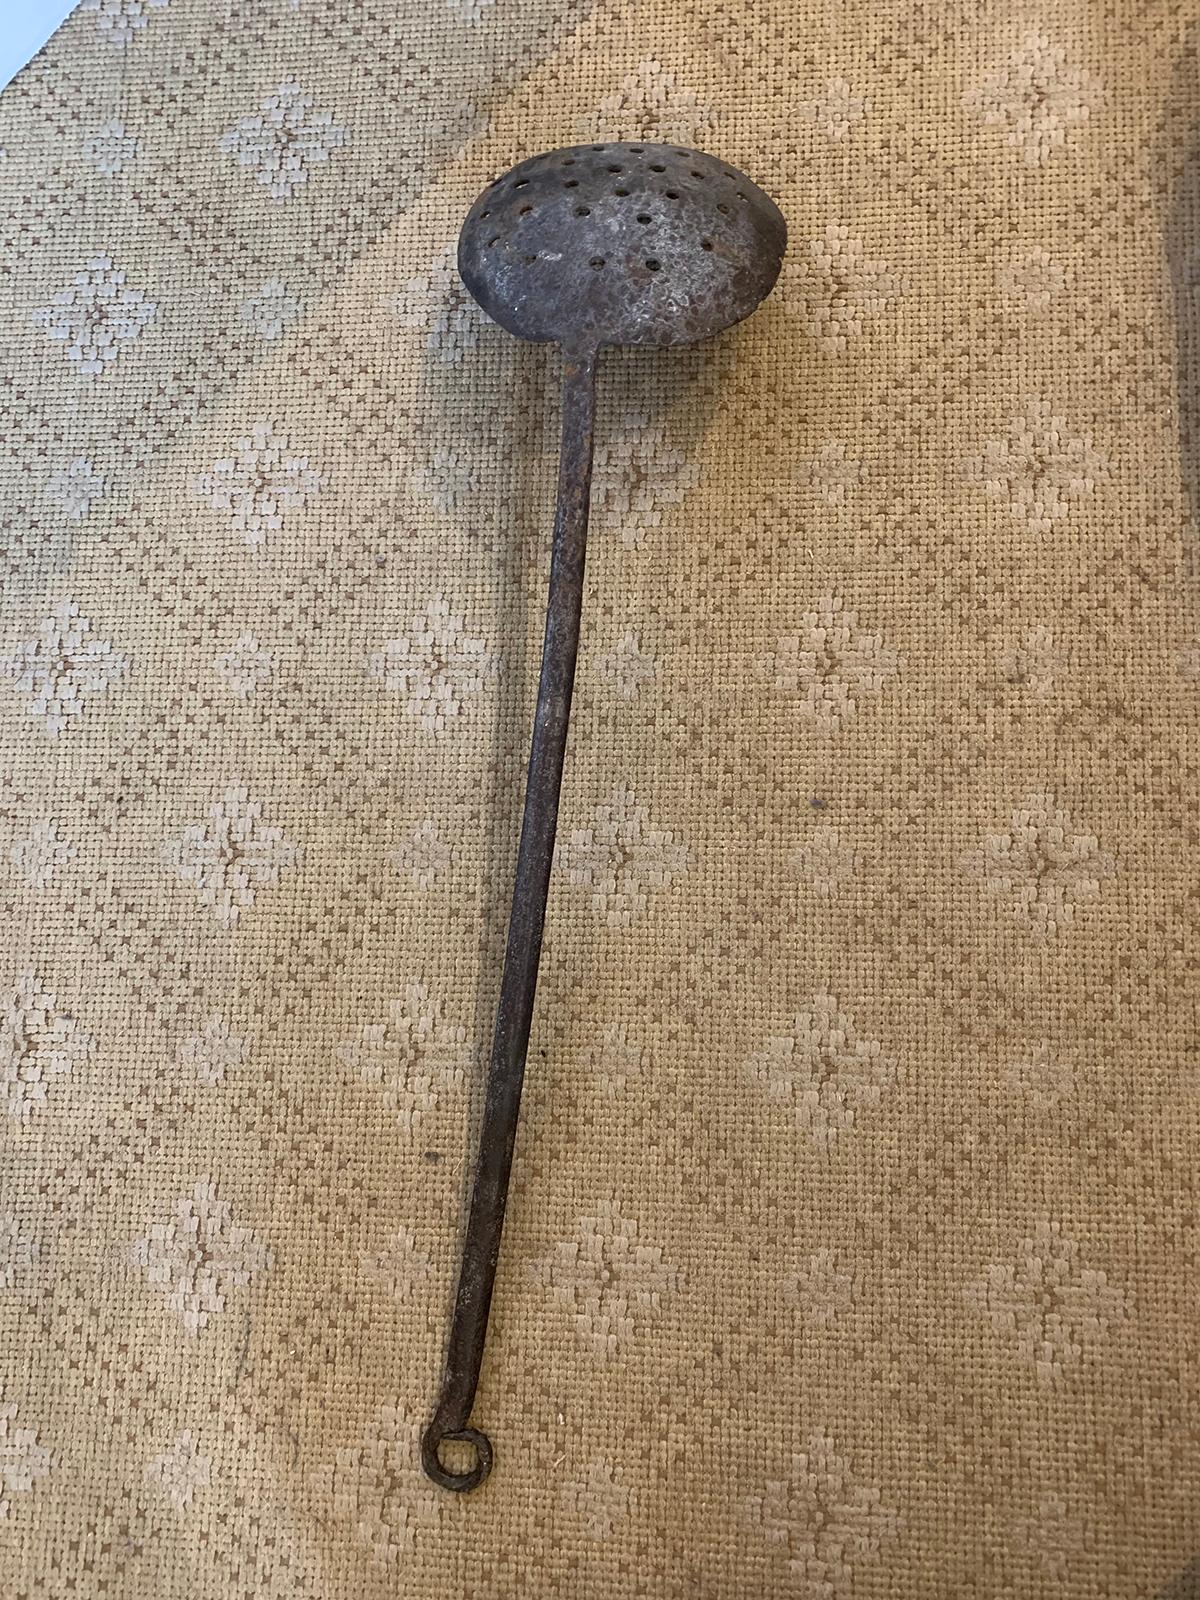 18th-19th Century Iron Tea Strainer Spoon For Sale 3